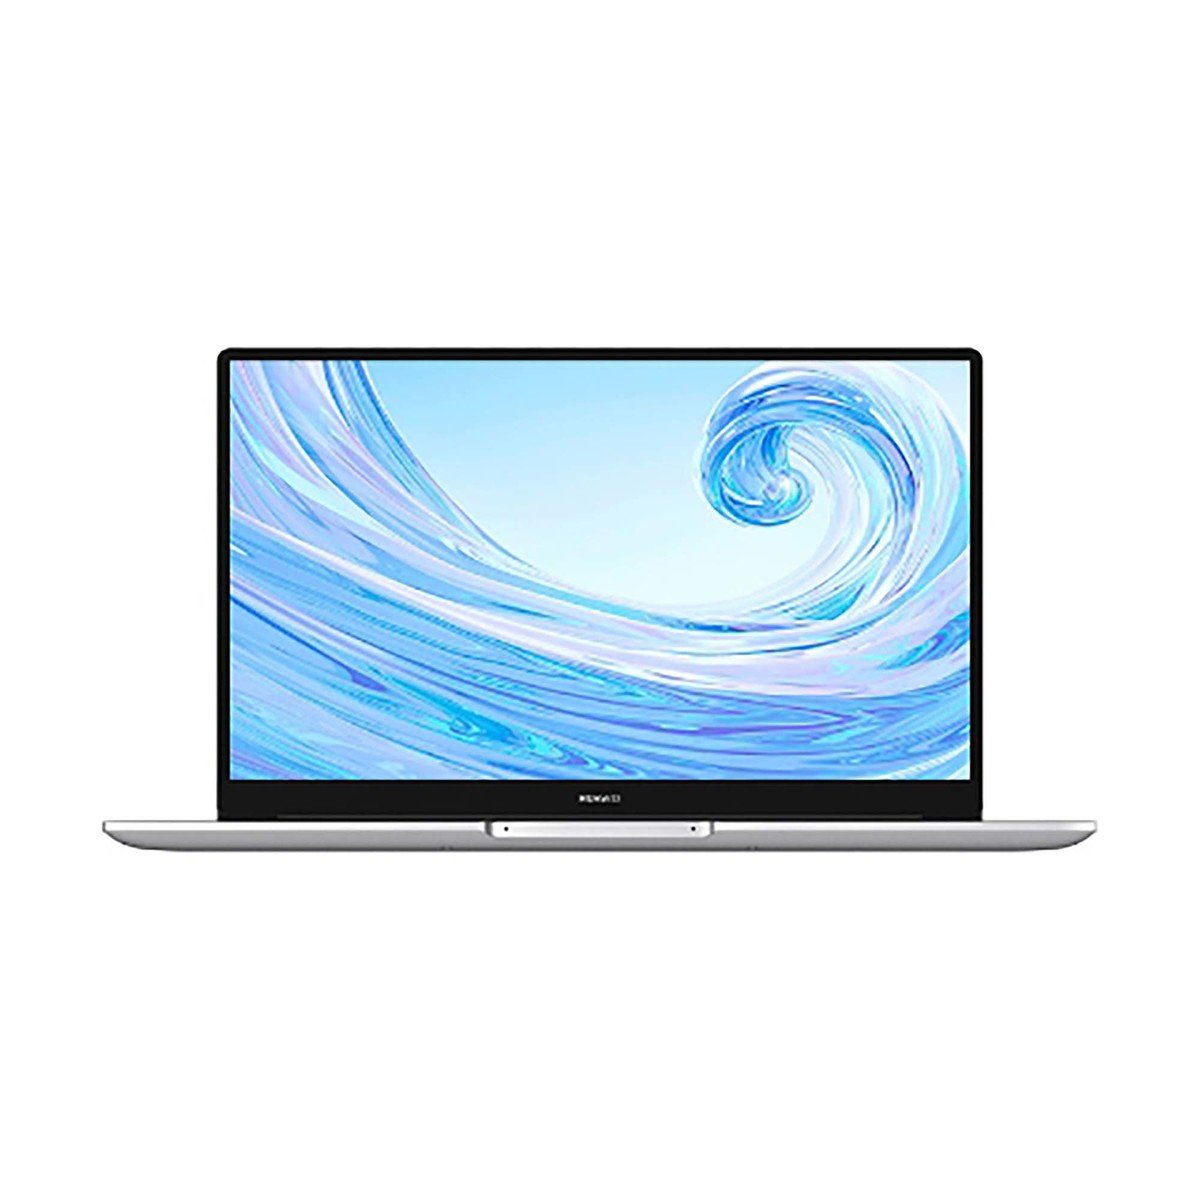 HUAWEI Matebook 13 Laptop With 13-Inch Display, Intel Core i5 Processor,8GB RAM,512GB SSD ,Intel®  UHD Graphics 620 Graphics Card,Silver